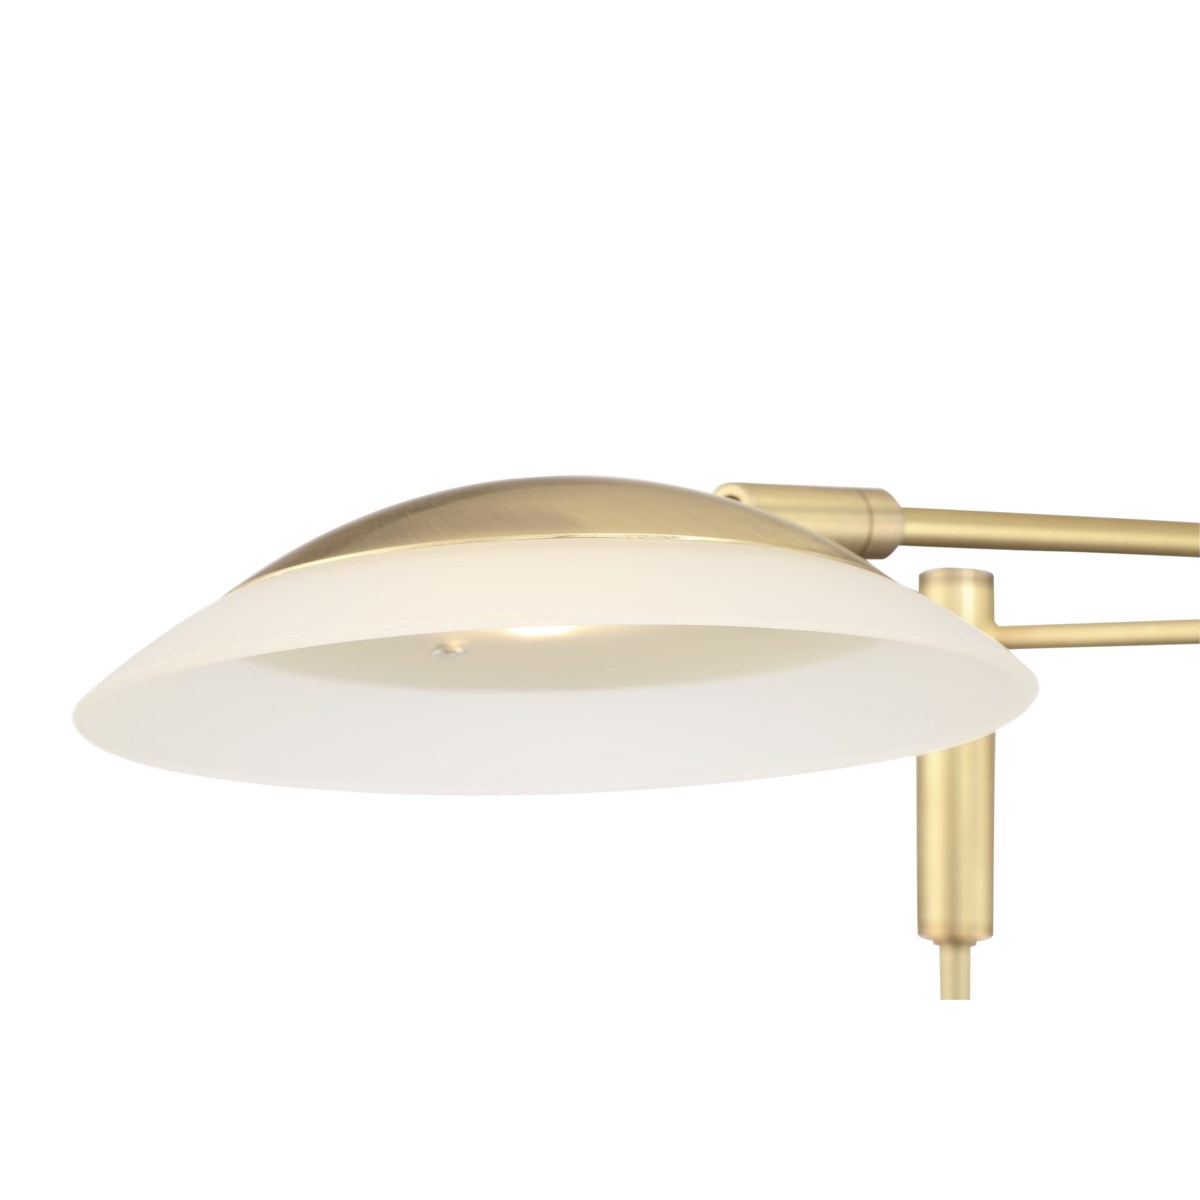 Meran Turbo Floor Lamp in Satin Brass